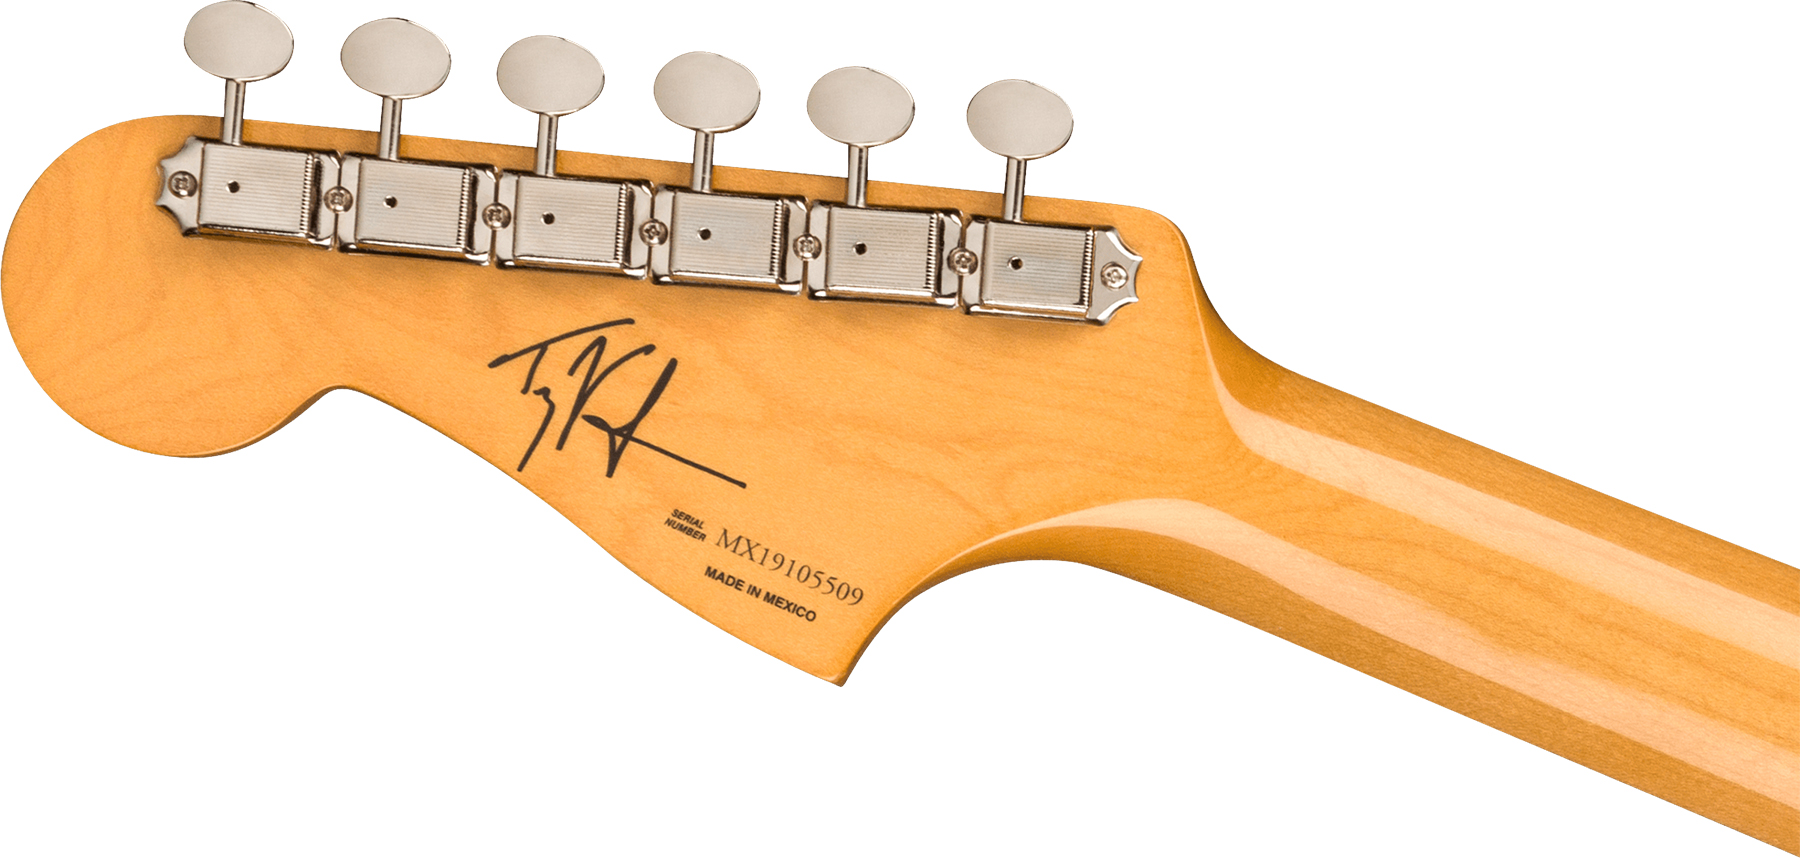 Fender Troy Van Leeuwen Jazzmaster Signature Mex Mn - Copper Age - Retro rock electric guitar - Variation 3